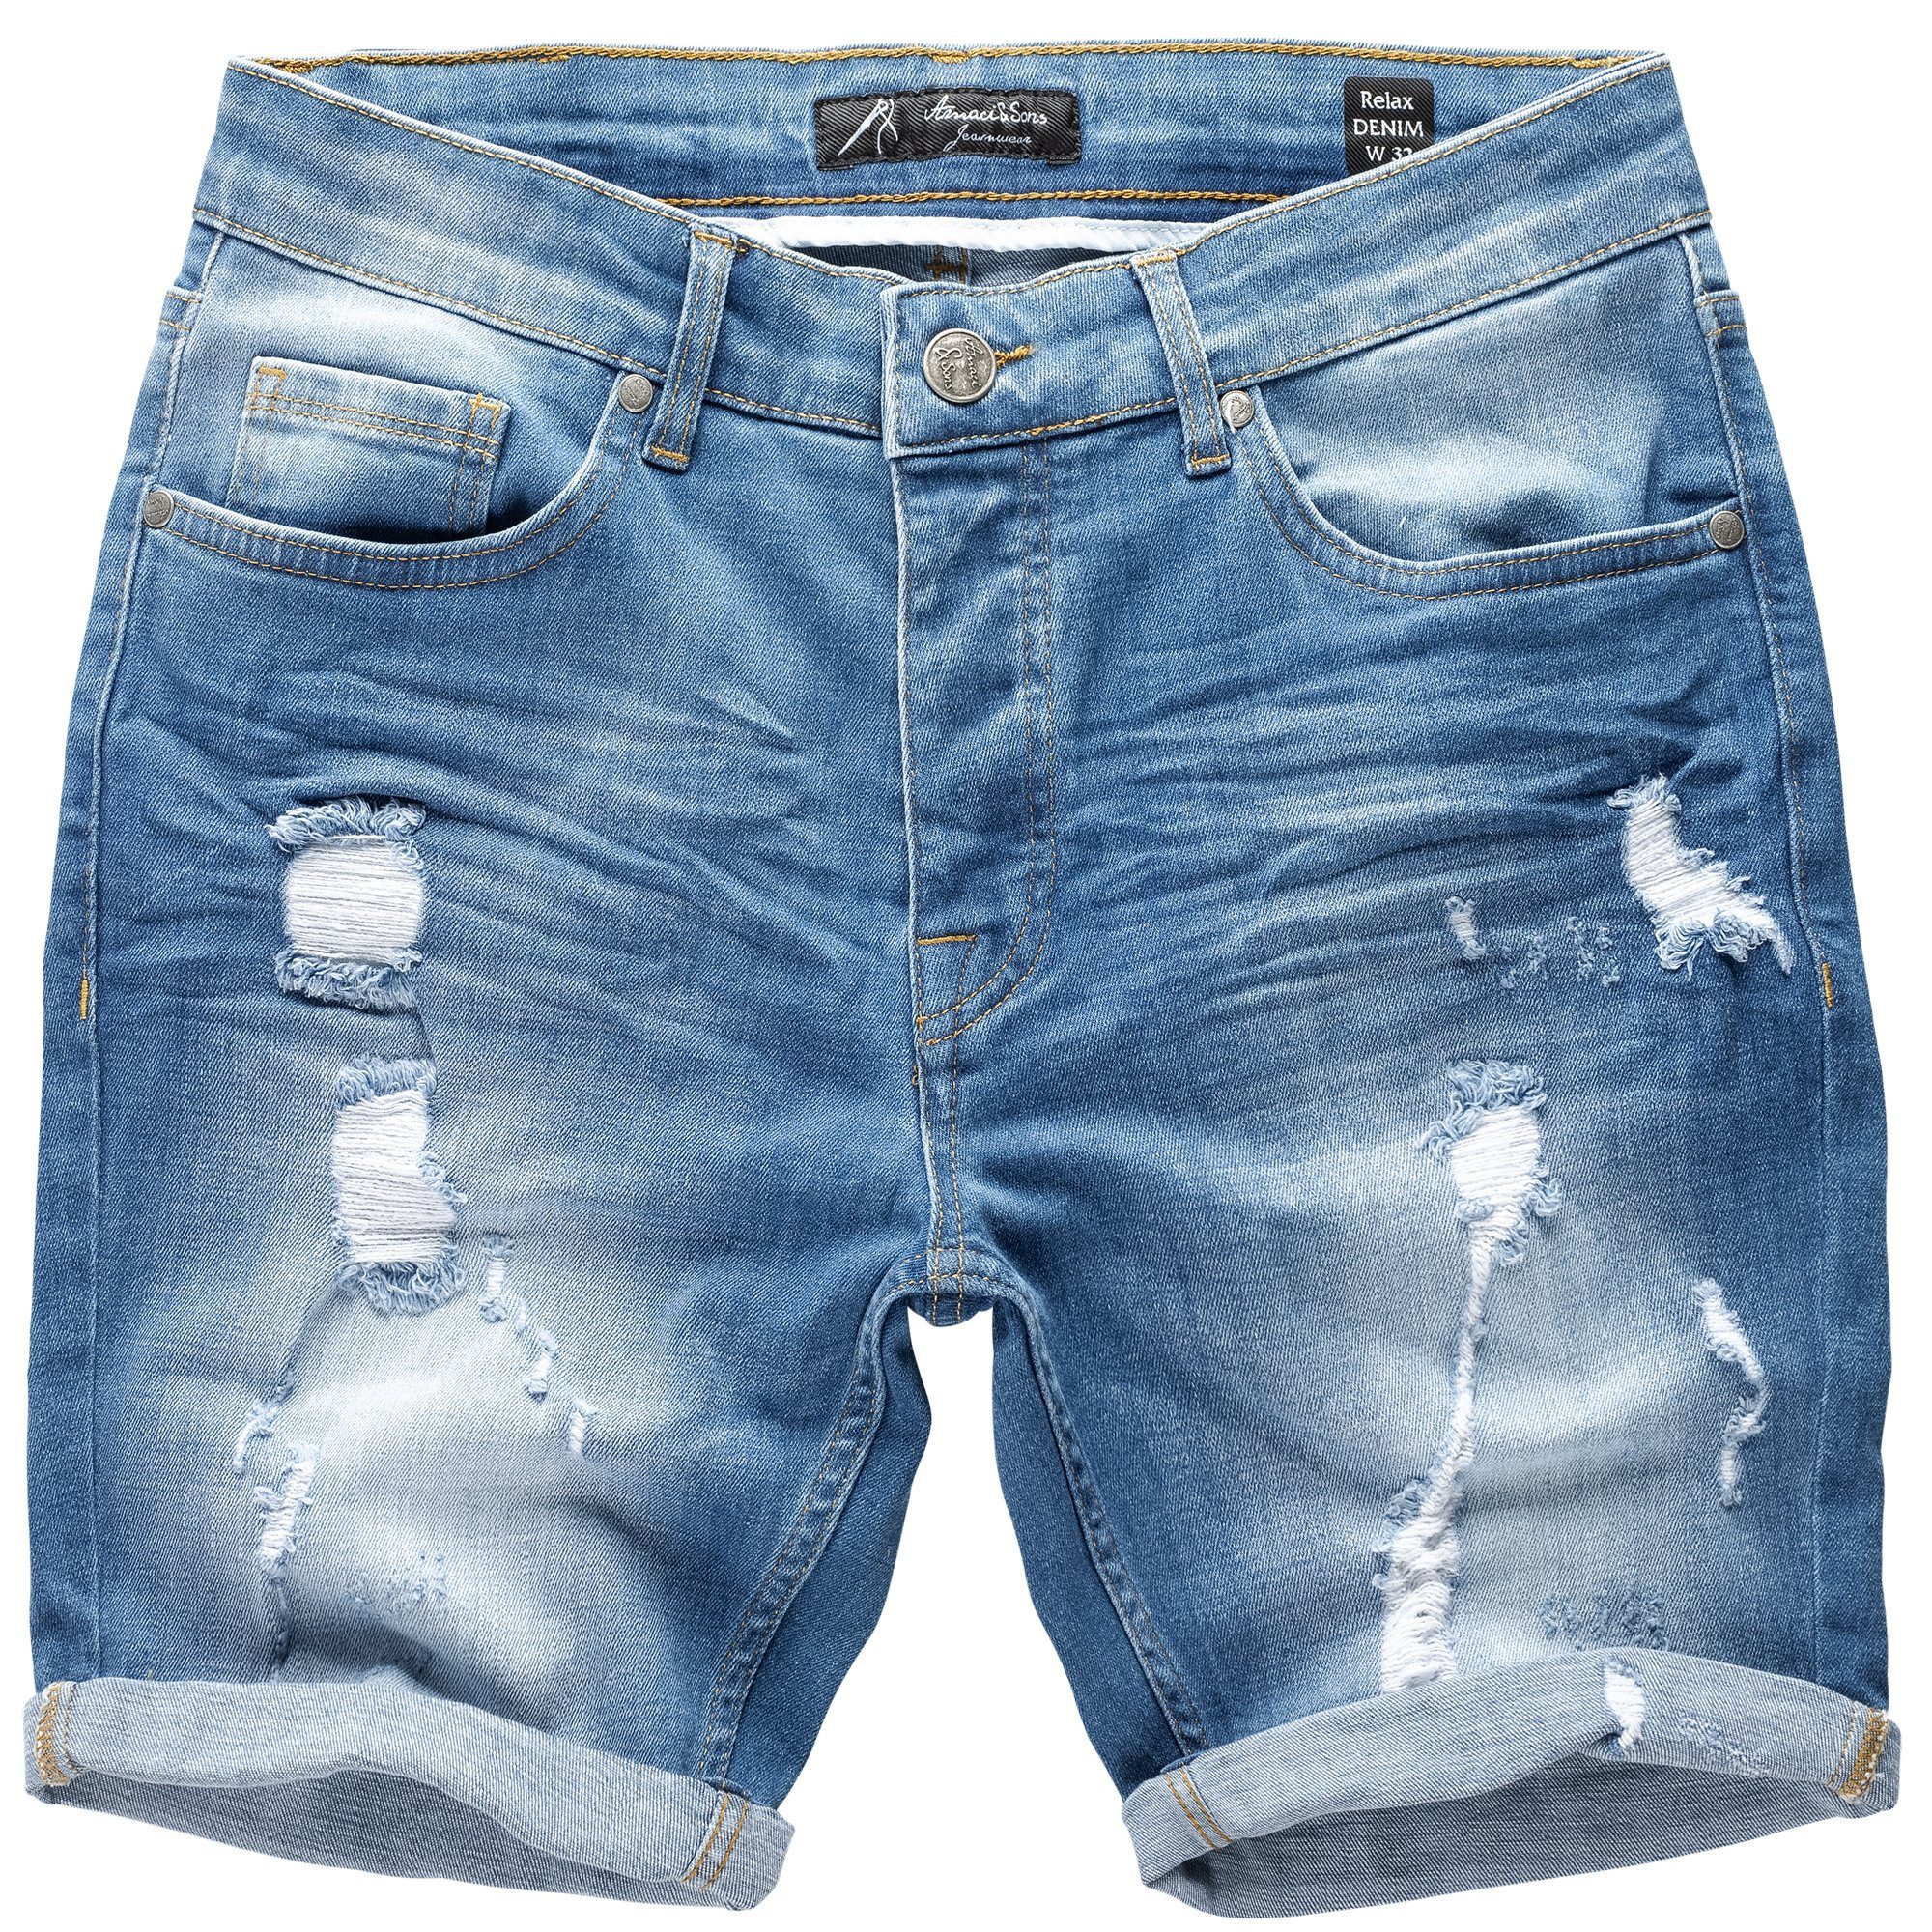 Amaci&Sons Jeansshorts SAN DIEGO Destroyed Jeans Shorts Hellblau